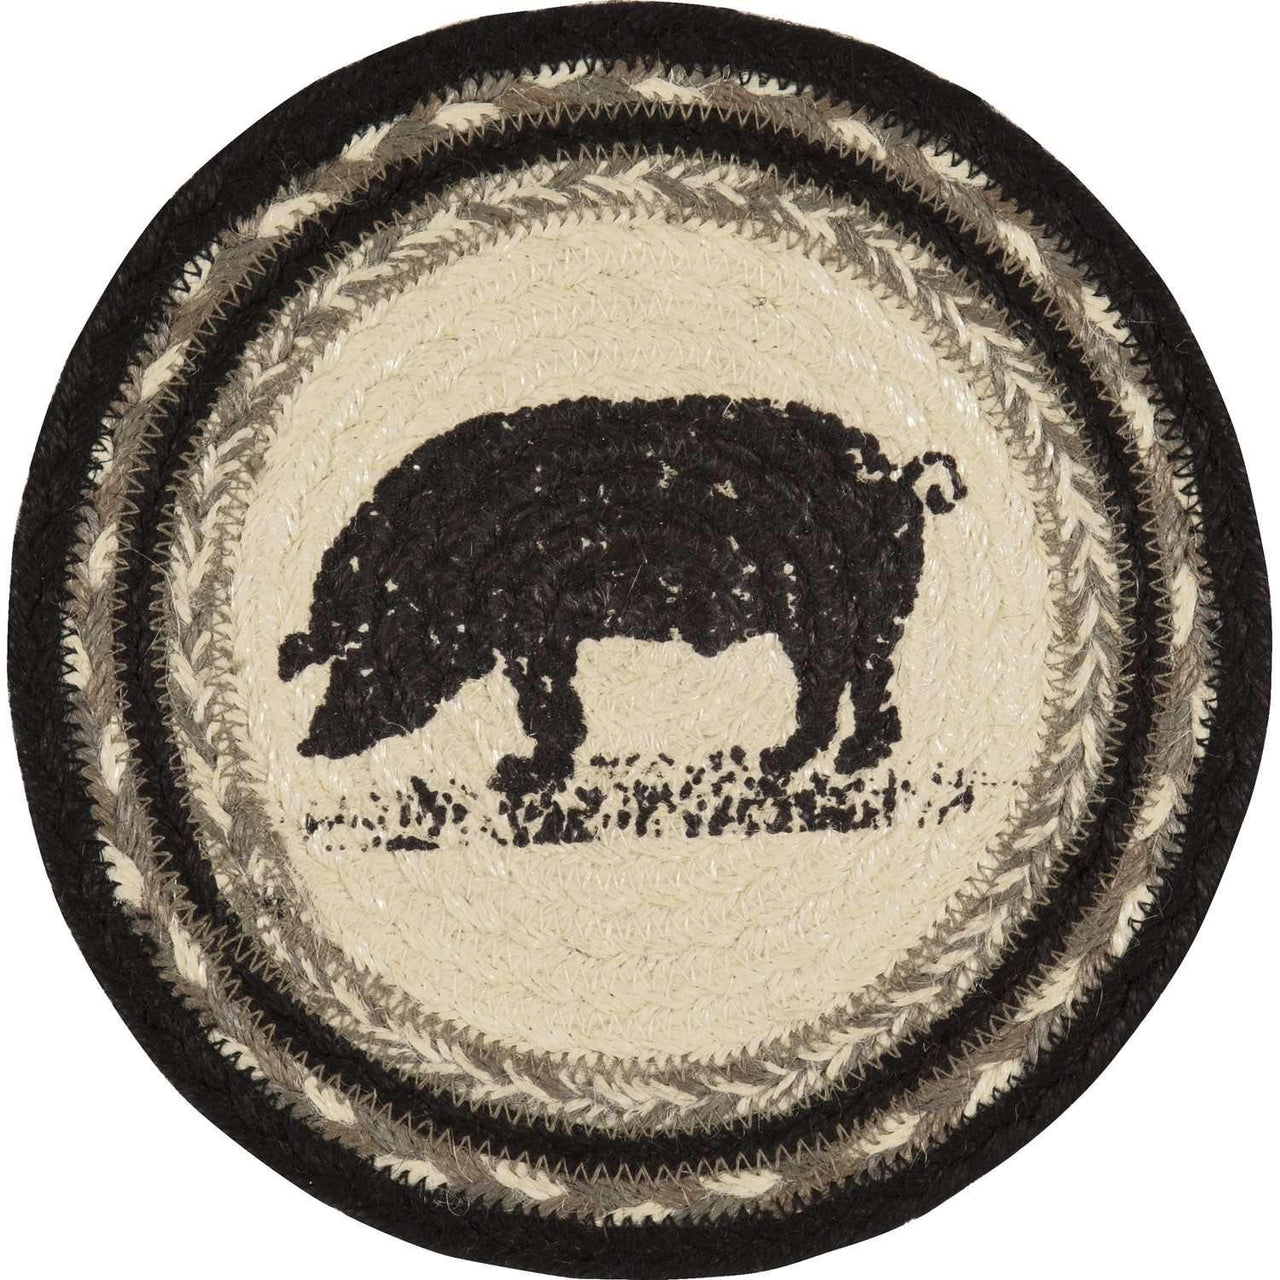 Sawyer Mill Charcoal Pig Jute Trivet 8" VHC Brands - The Fox Decor